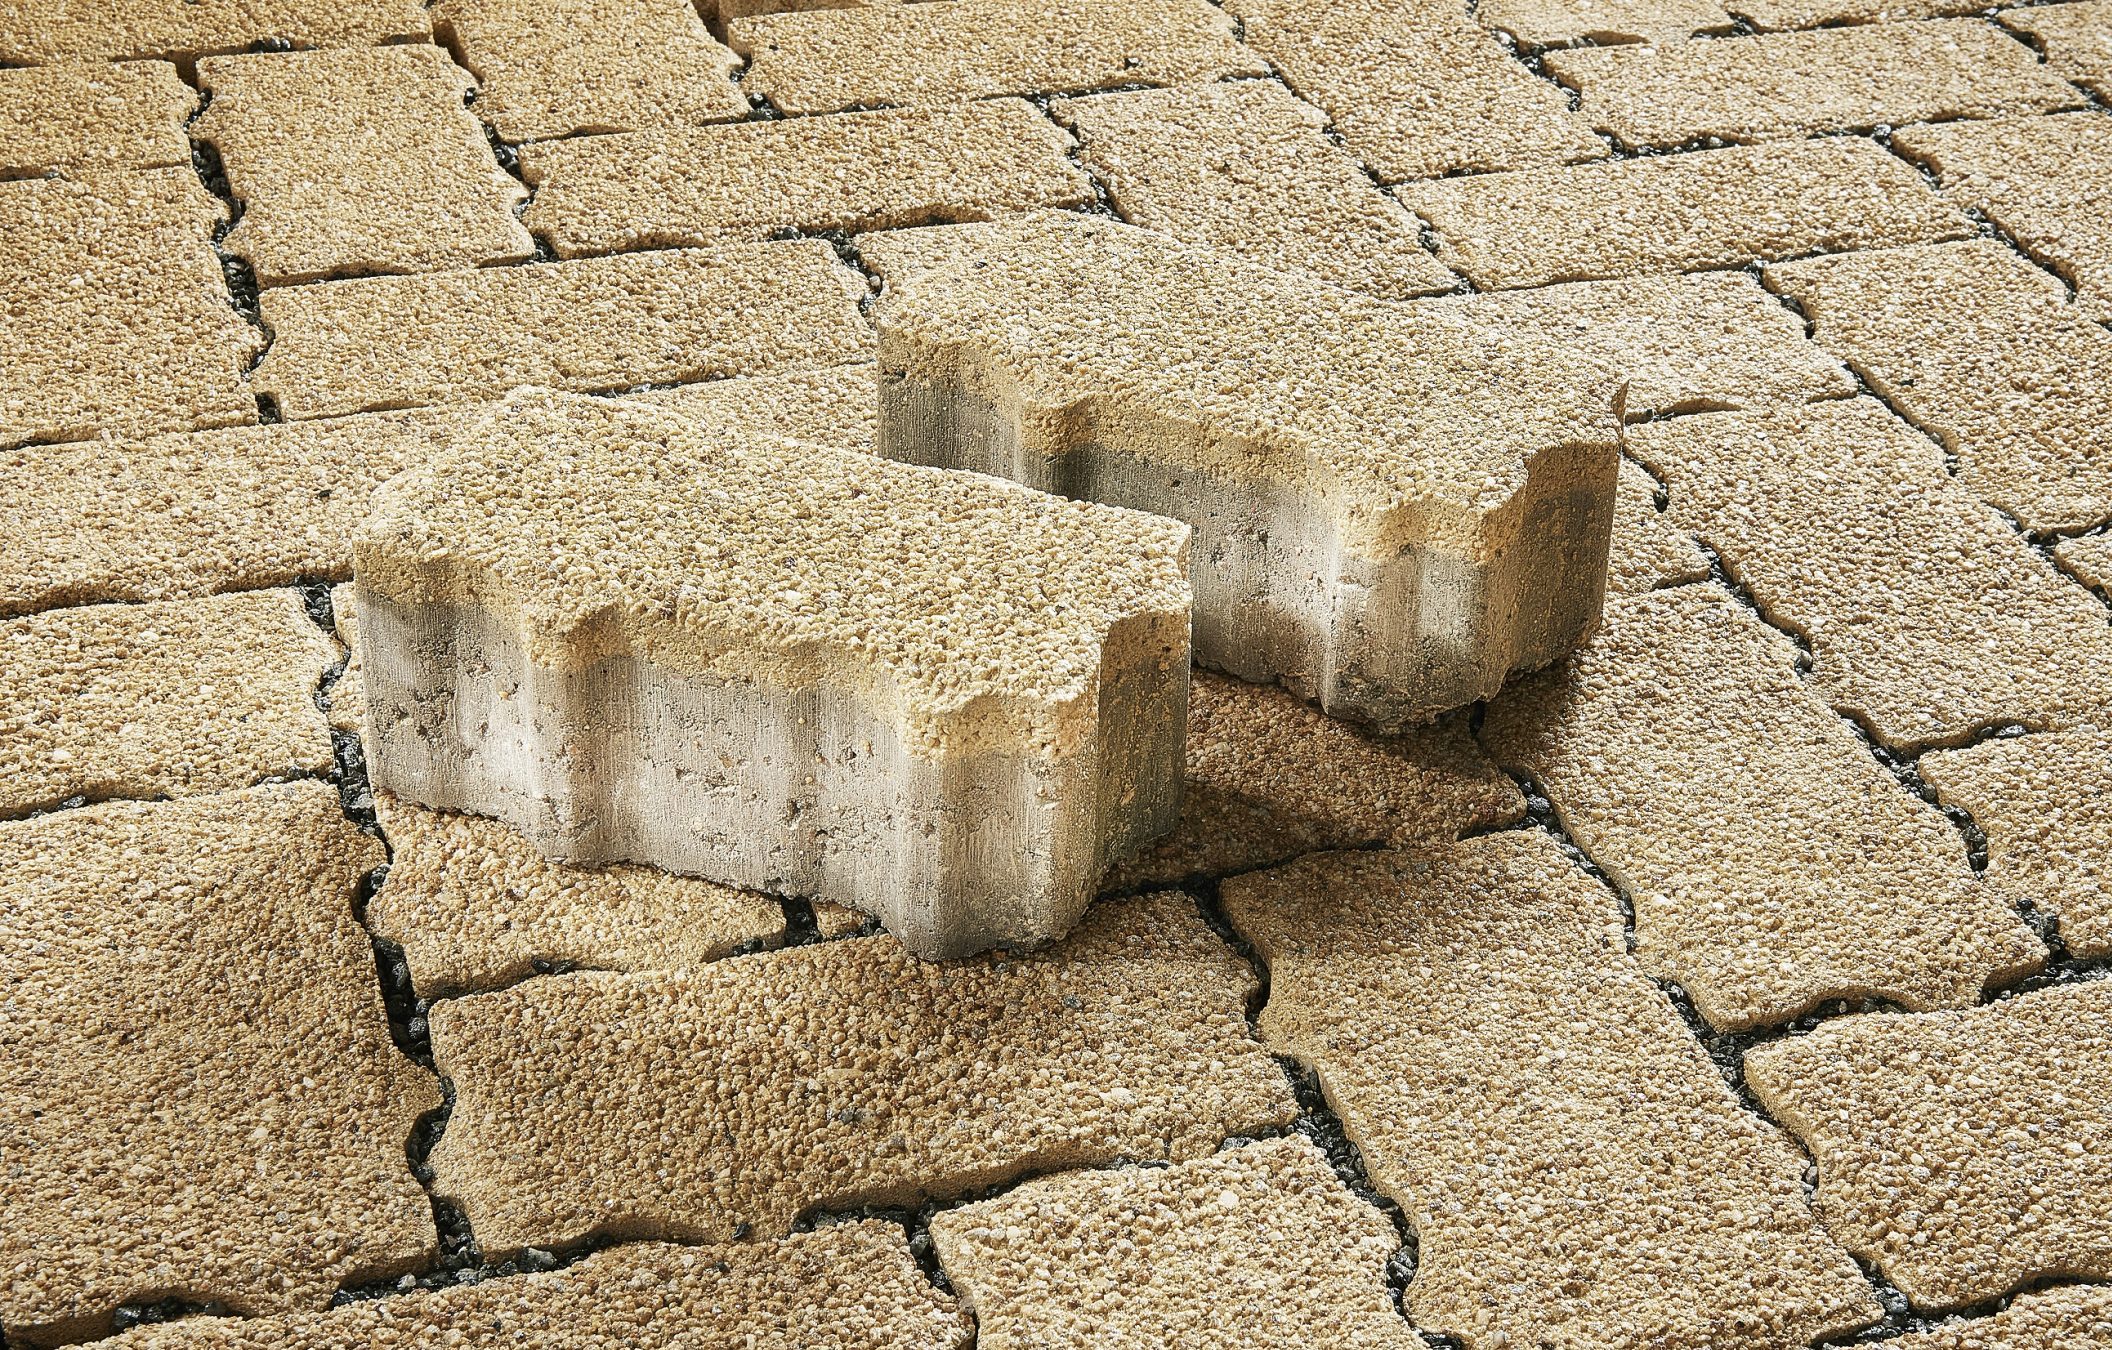 permeable block paving | permeable paving | granite pavers | granite block paving | is block paving permeable | what is permeable paving | brett permeable block paving | suds | drainage pavers | sustainable paving | eco friendly paverse